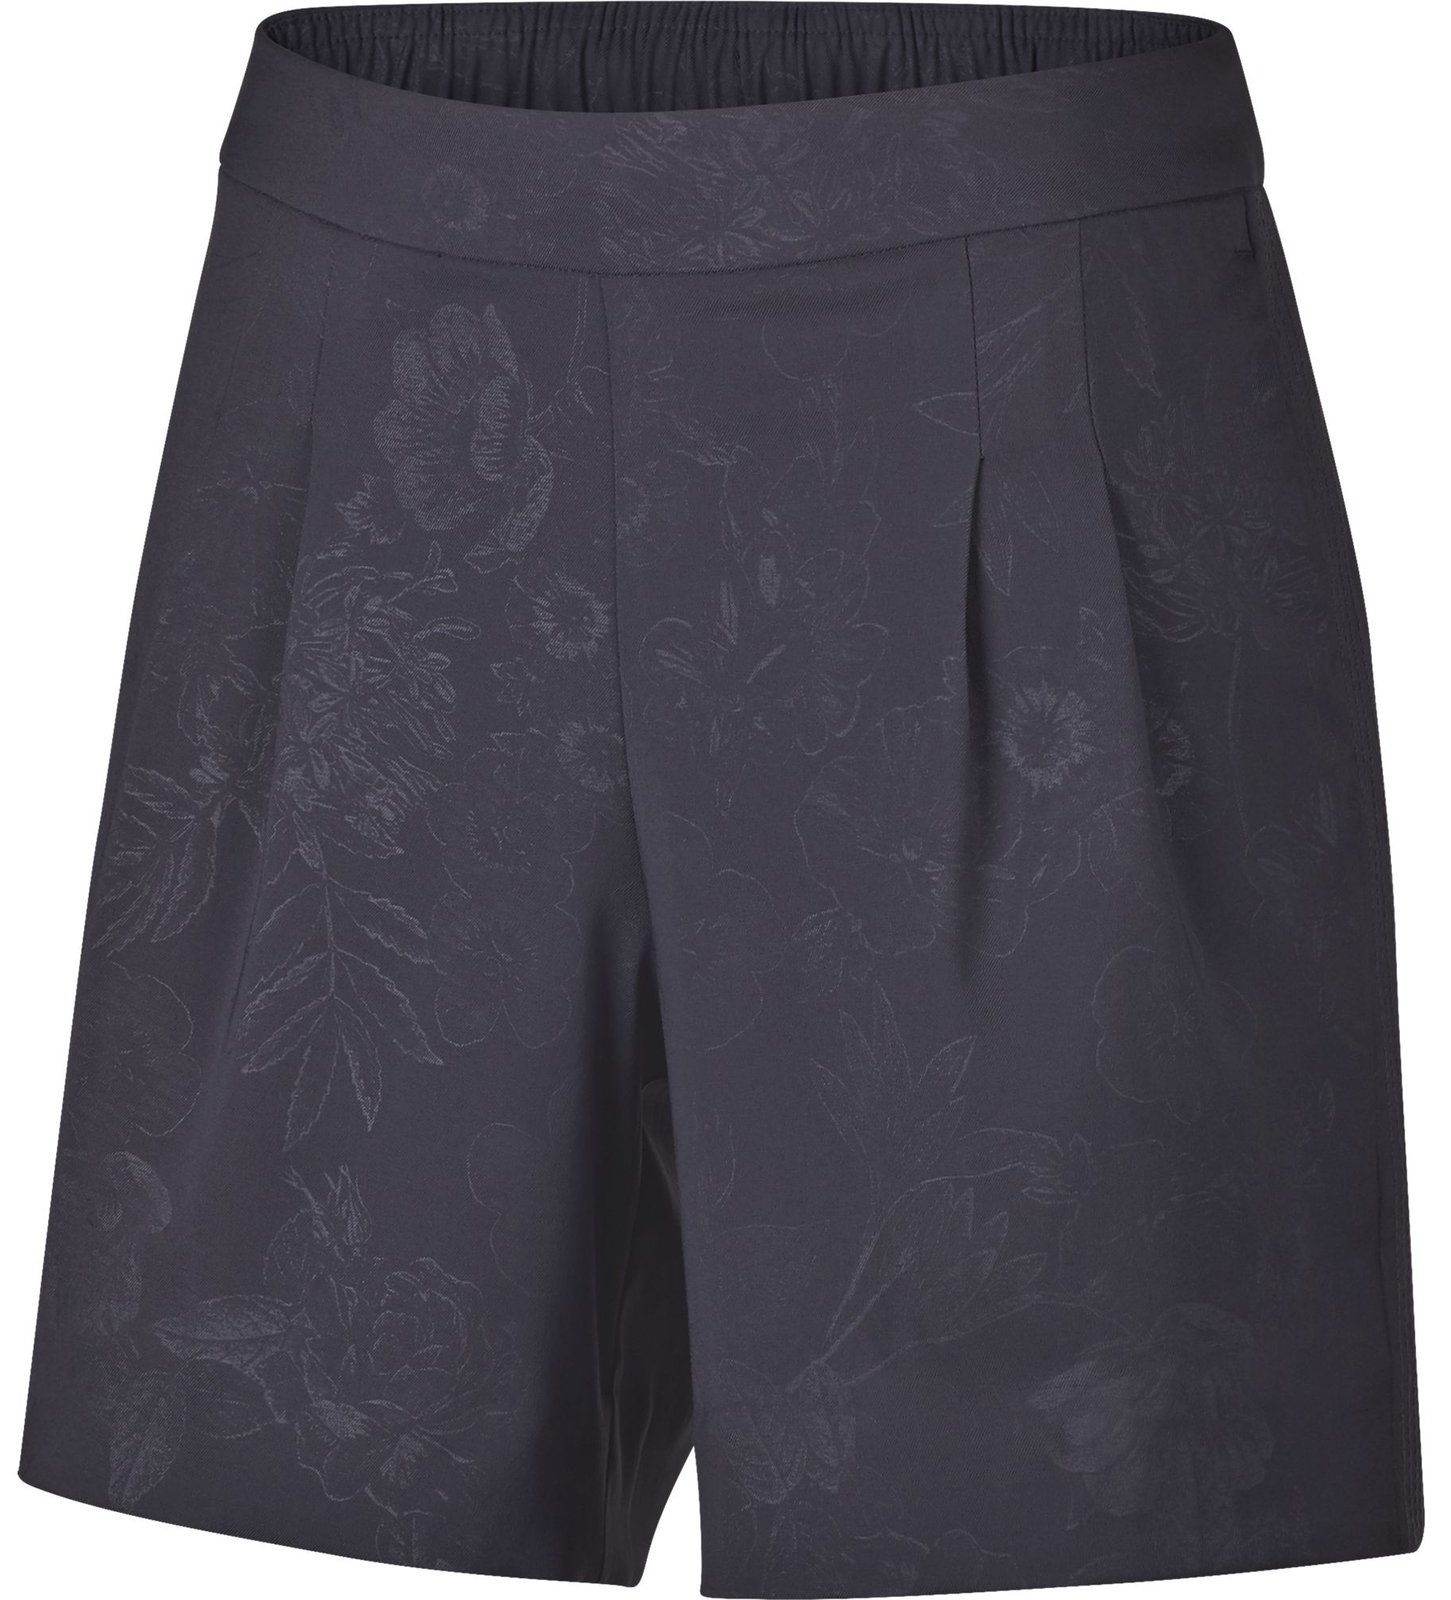 Pantalones cortos Nike Dri-Fit Floral Embossed Gridiron M